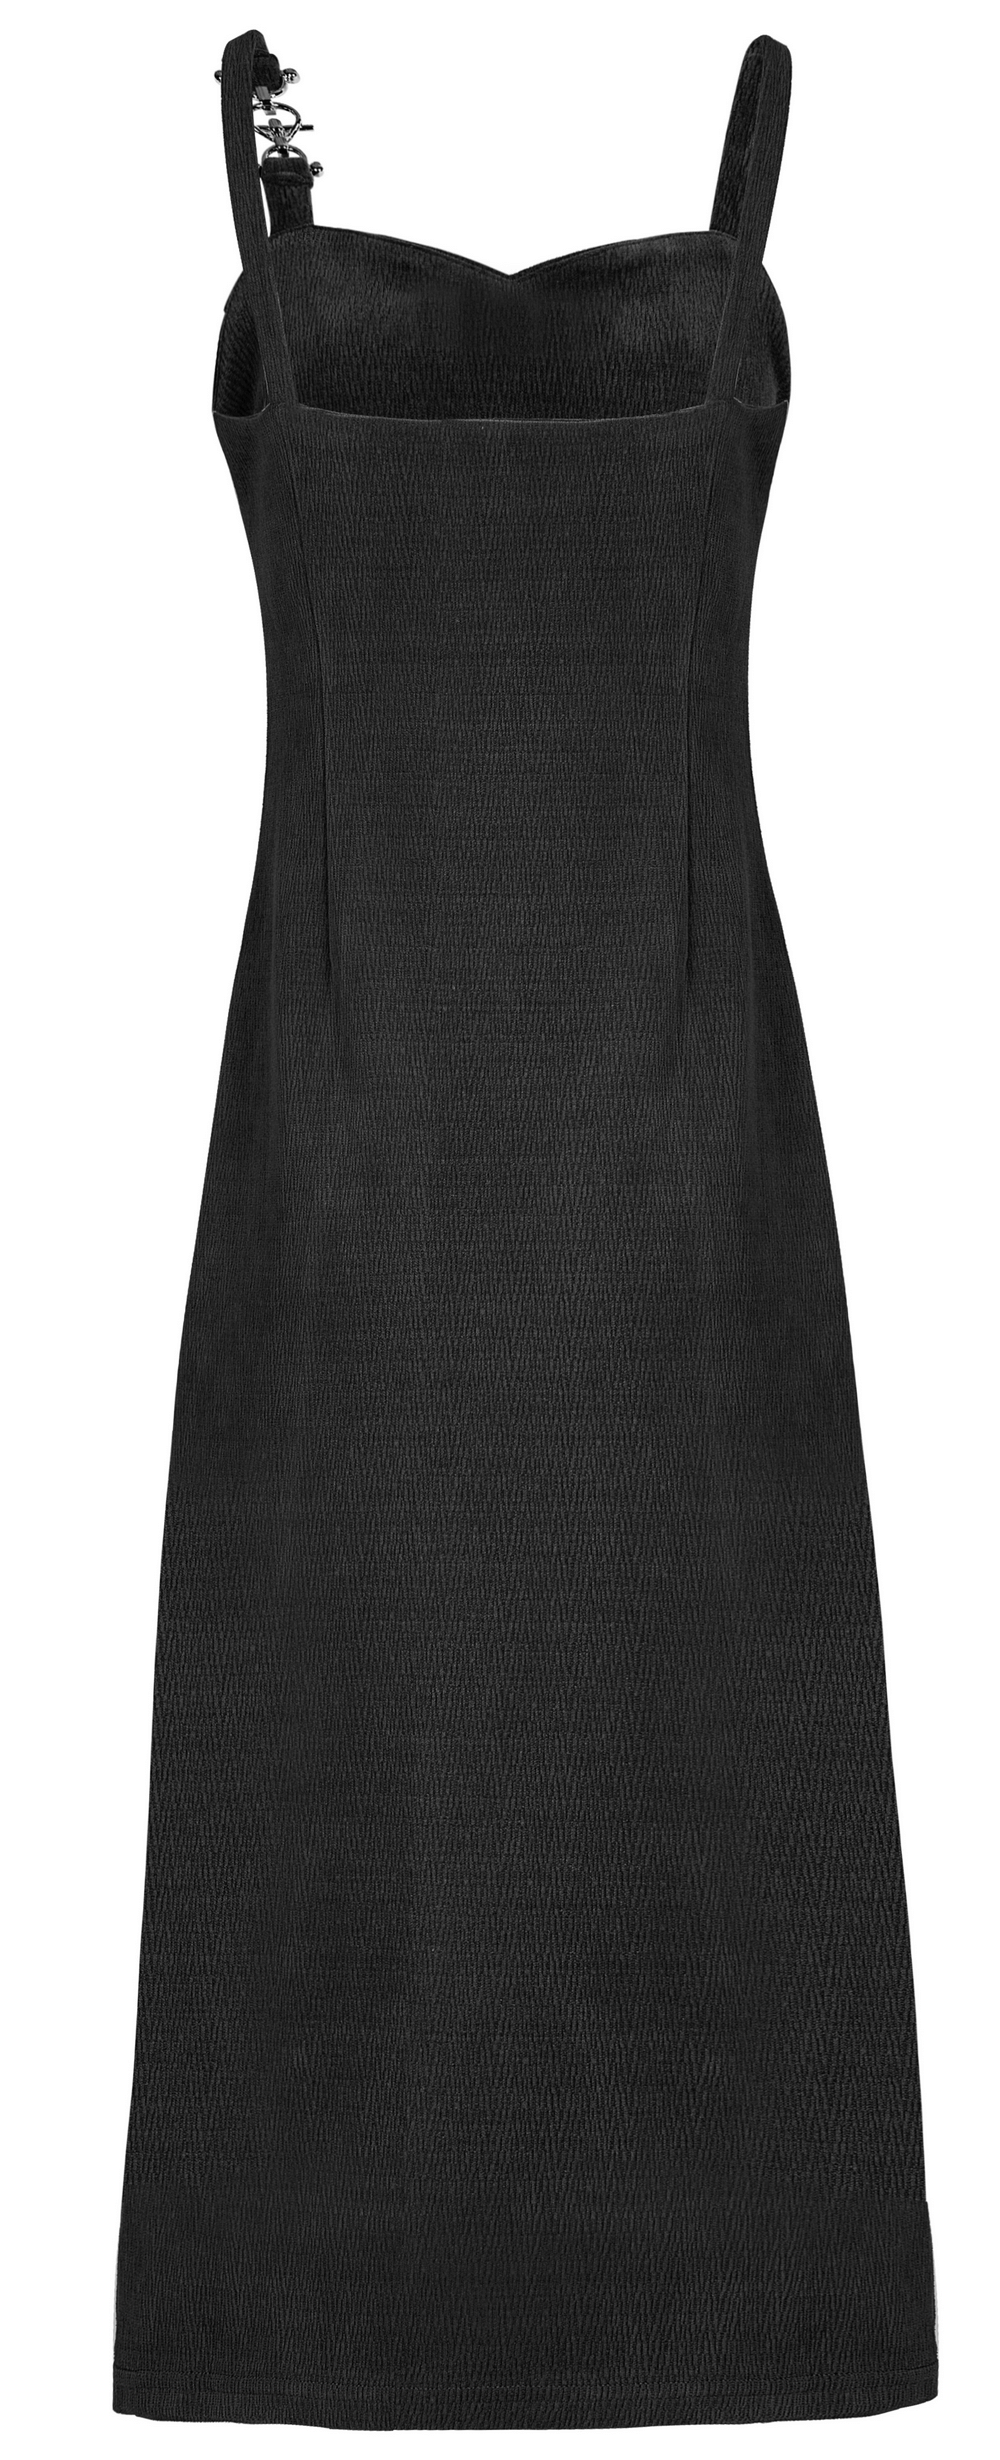 Chic Black Midi Dress with Unique Metal Straps - HARD'N'HEAVY